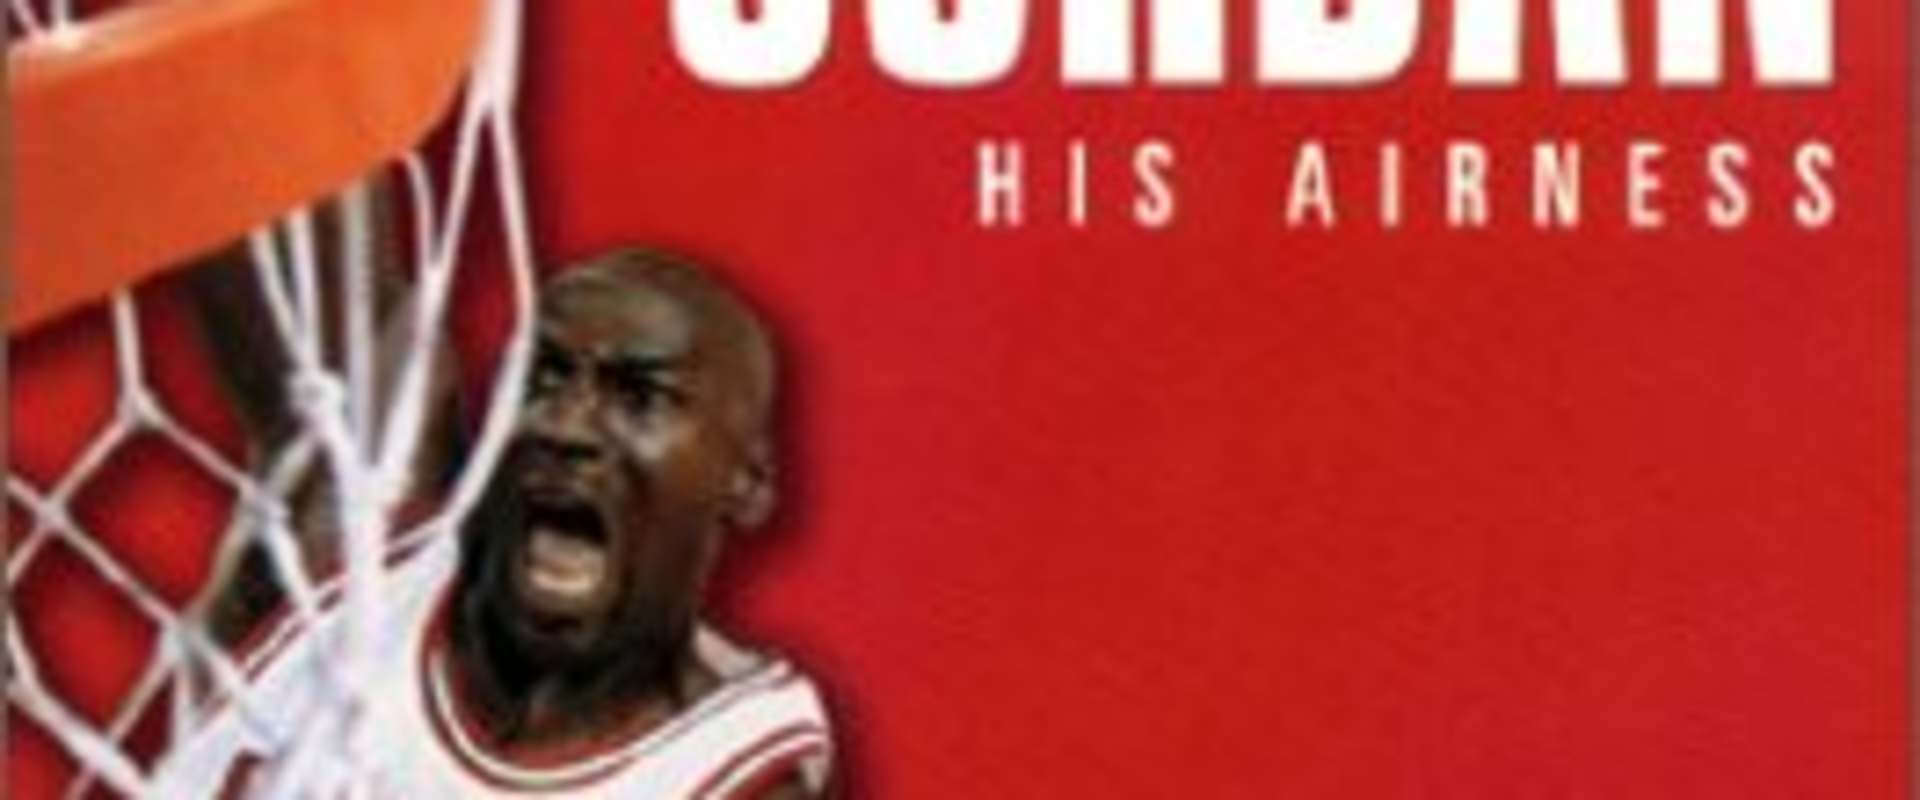 Michael Jordan: His Airness background 1